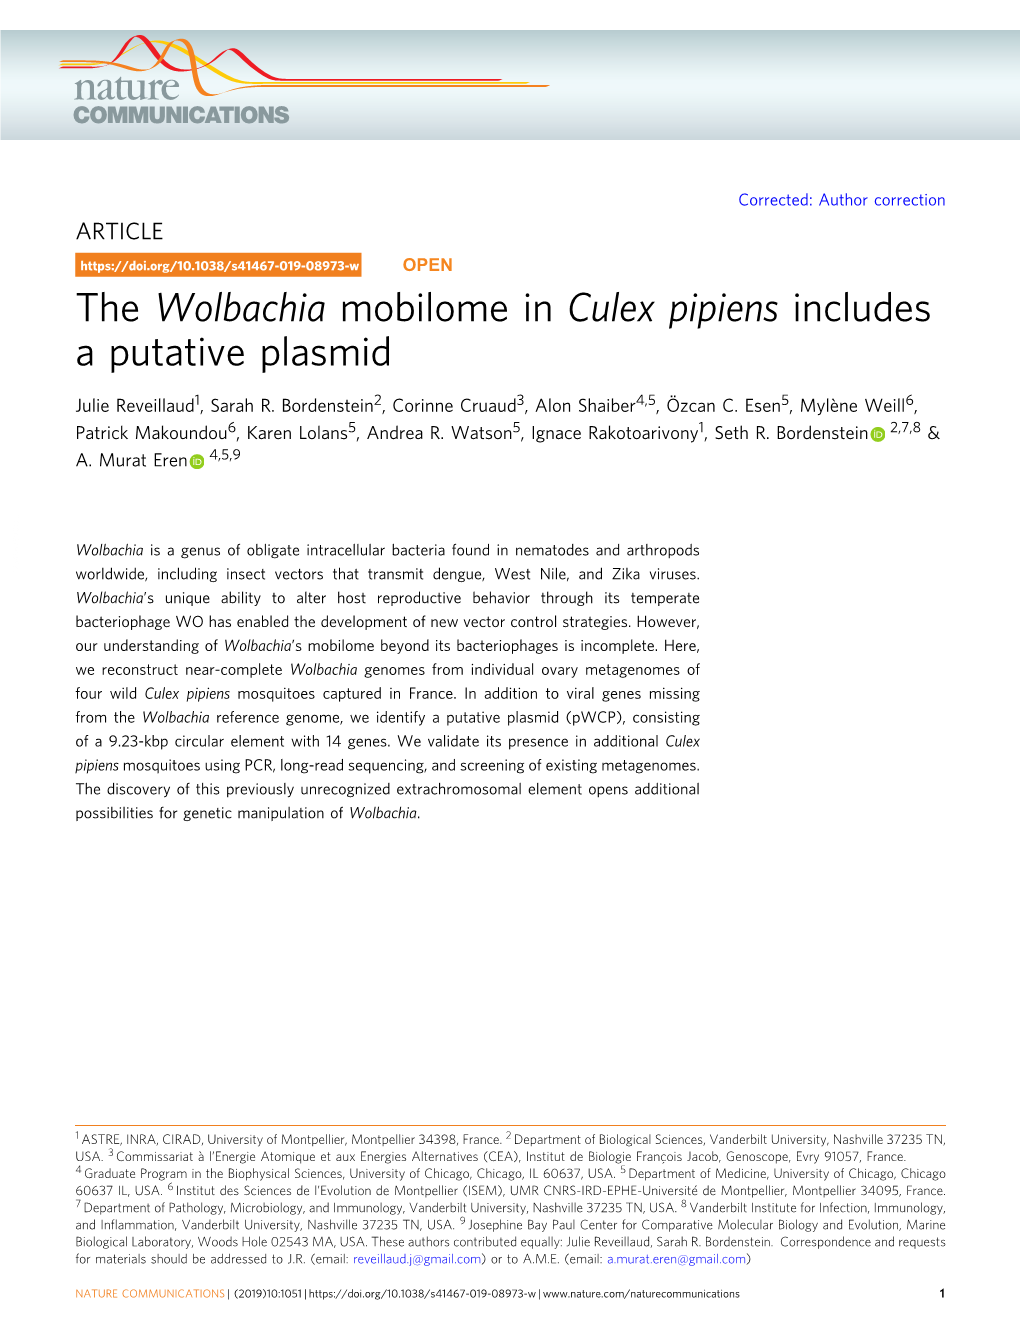 The Wolbachia Mobilome in Culex Pipiens Includes a Putative Plasmid